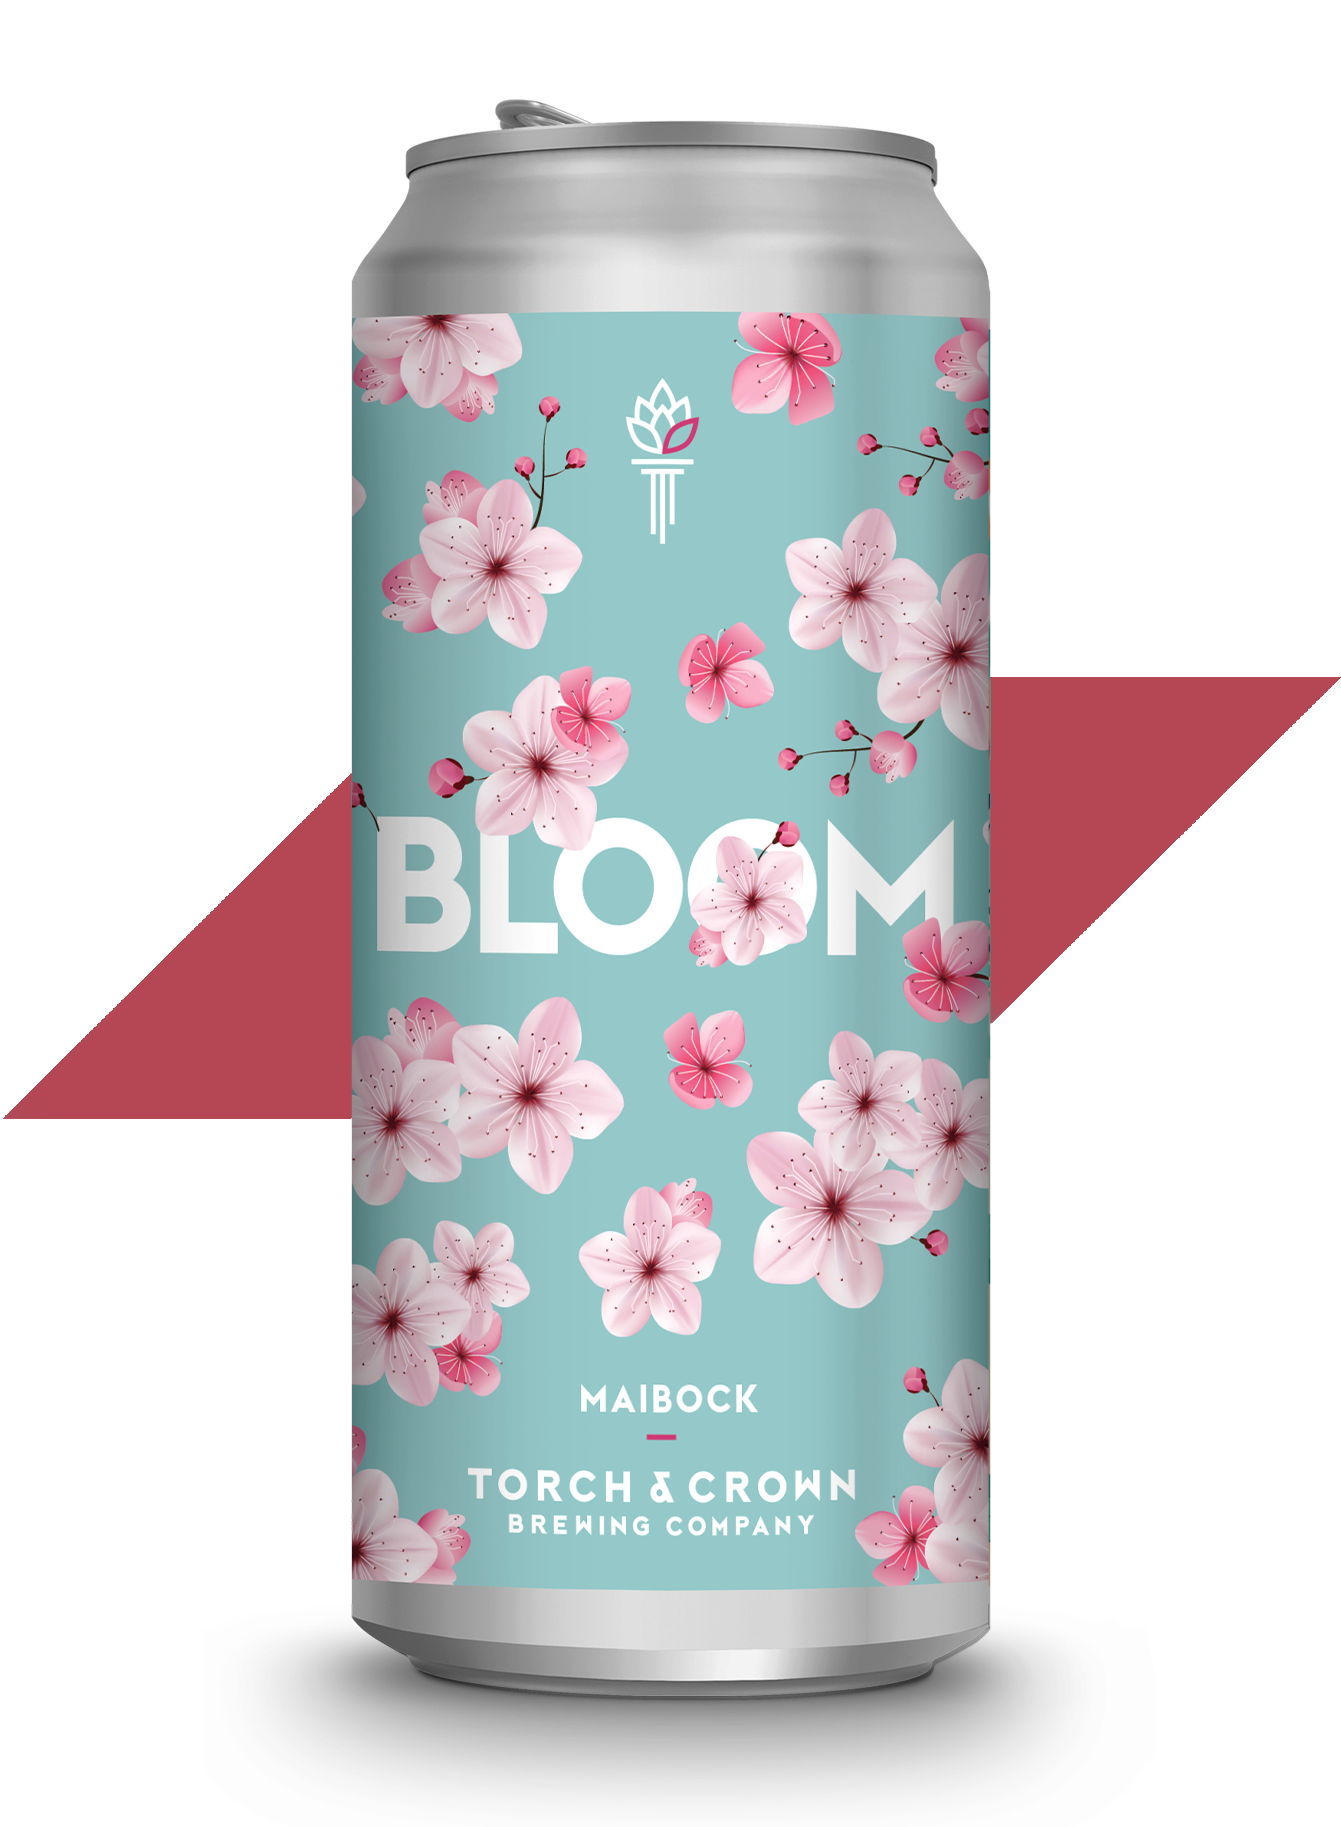 Bloom Maibock | Torch & Crown